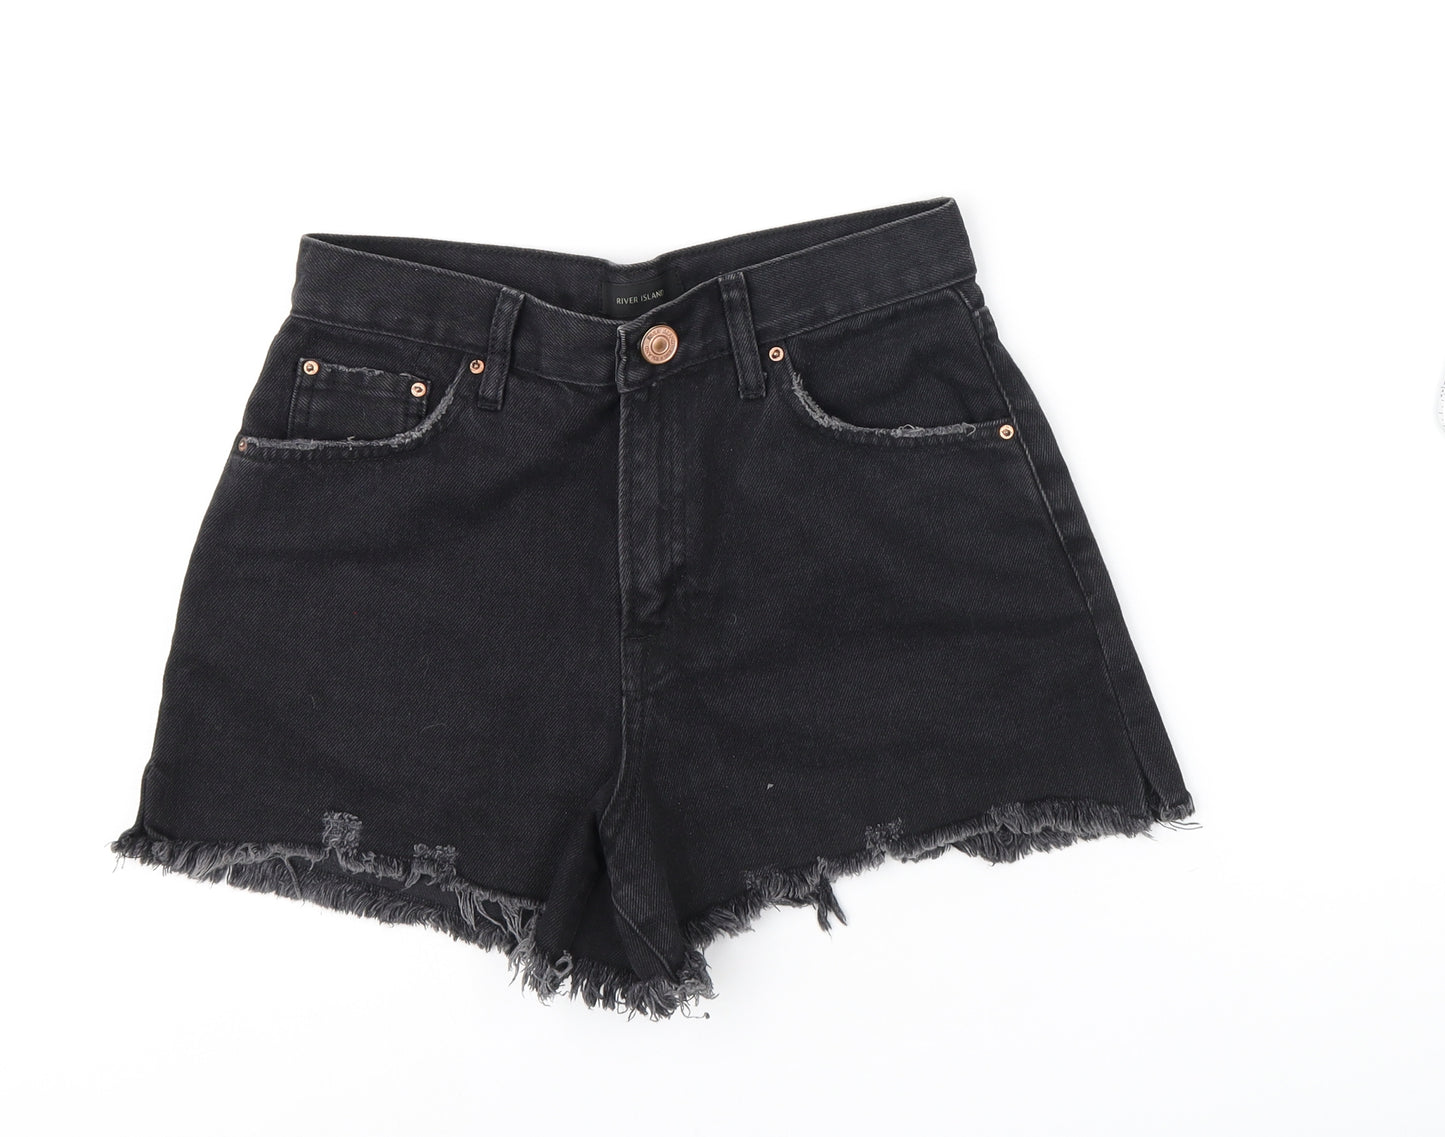 River Island Womens Black 100% Cotton Cut-Off Shorts Size 6 L3 in Regular Zip - Distressed Hems